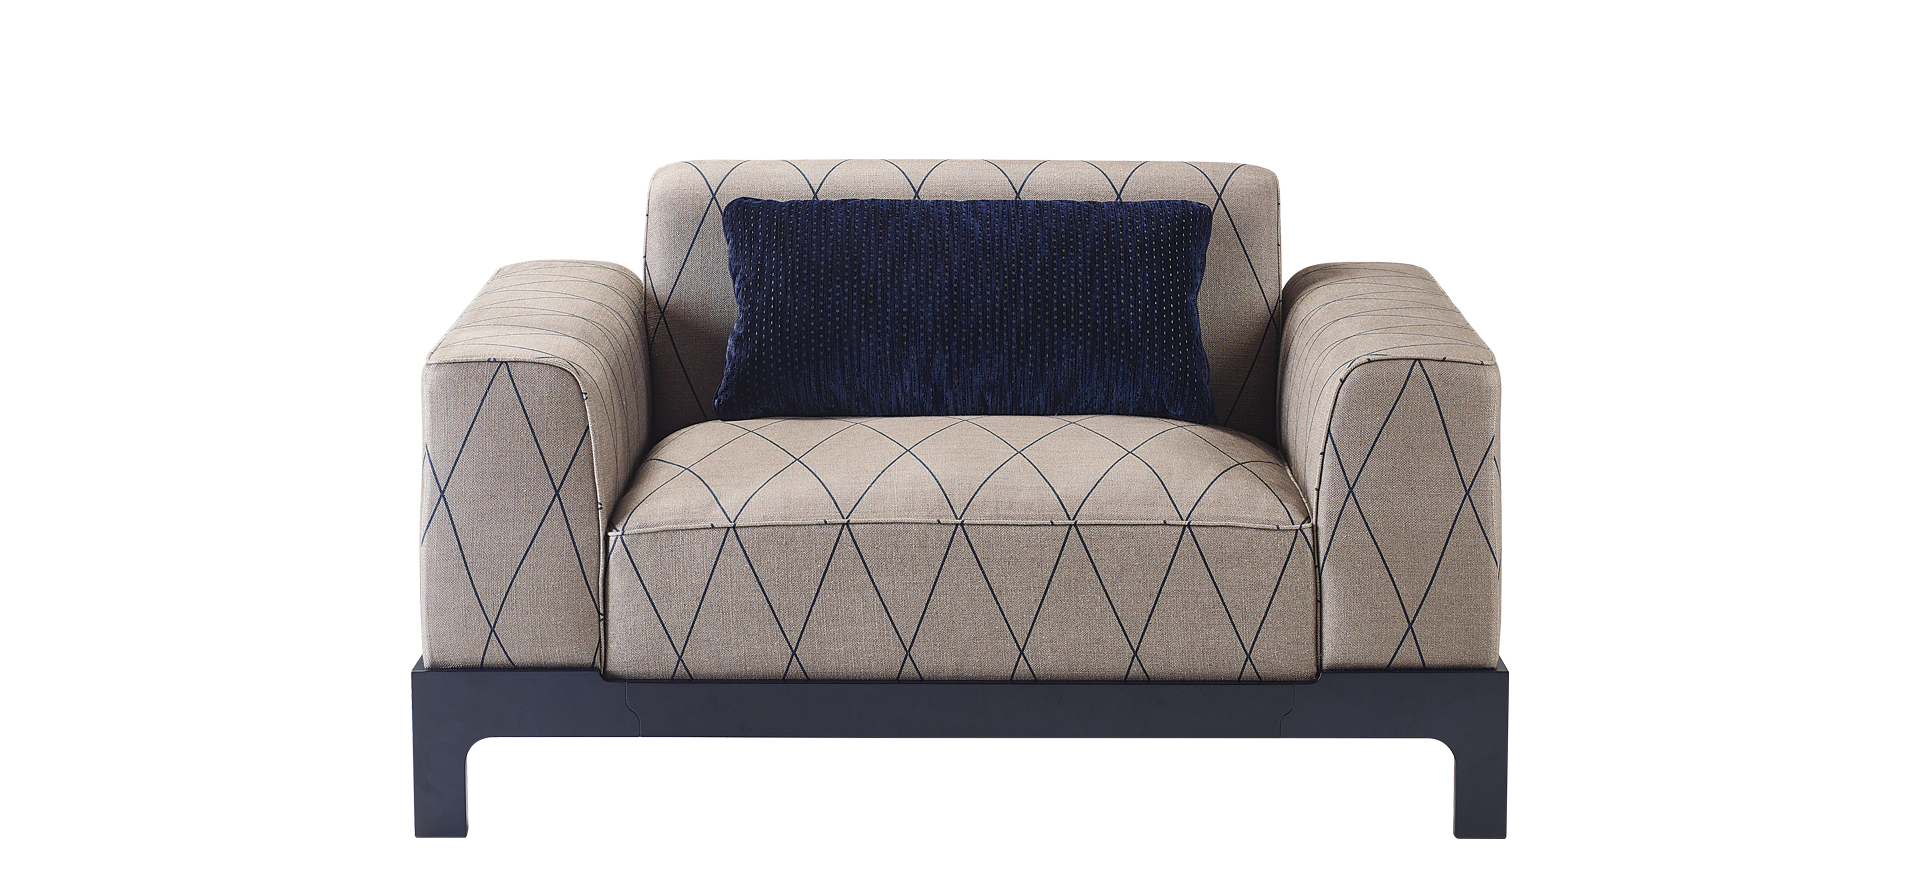 Pullman&nbsp;— деревянный диван с тканевыми подушками и обивкой из коллекции Indigo Tales компании Promemoria | Promemoria